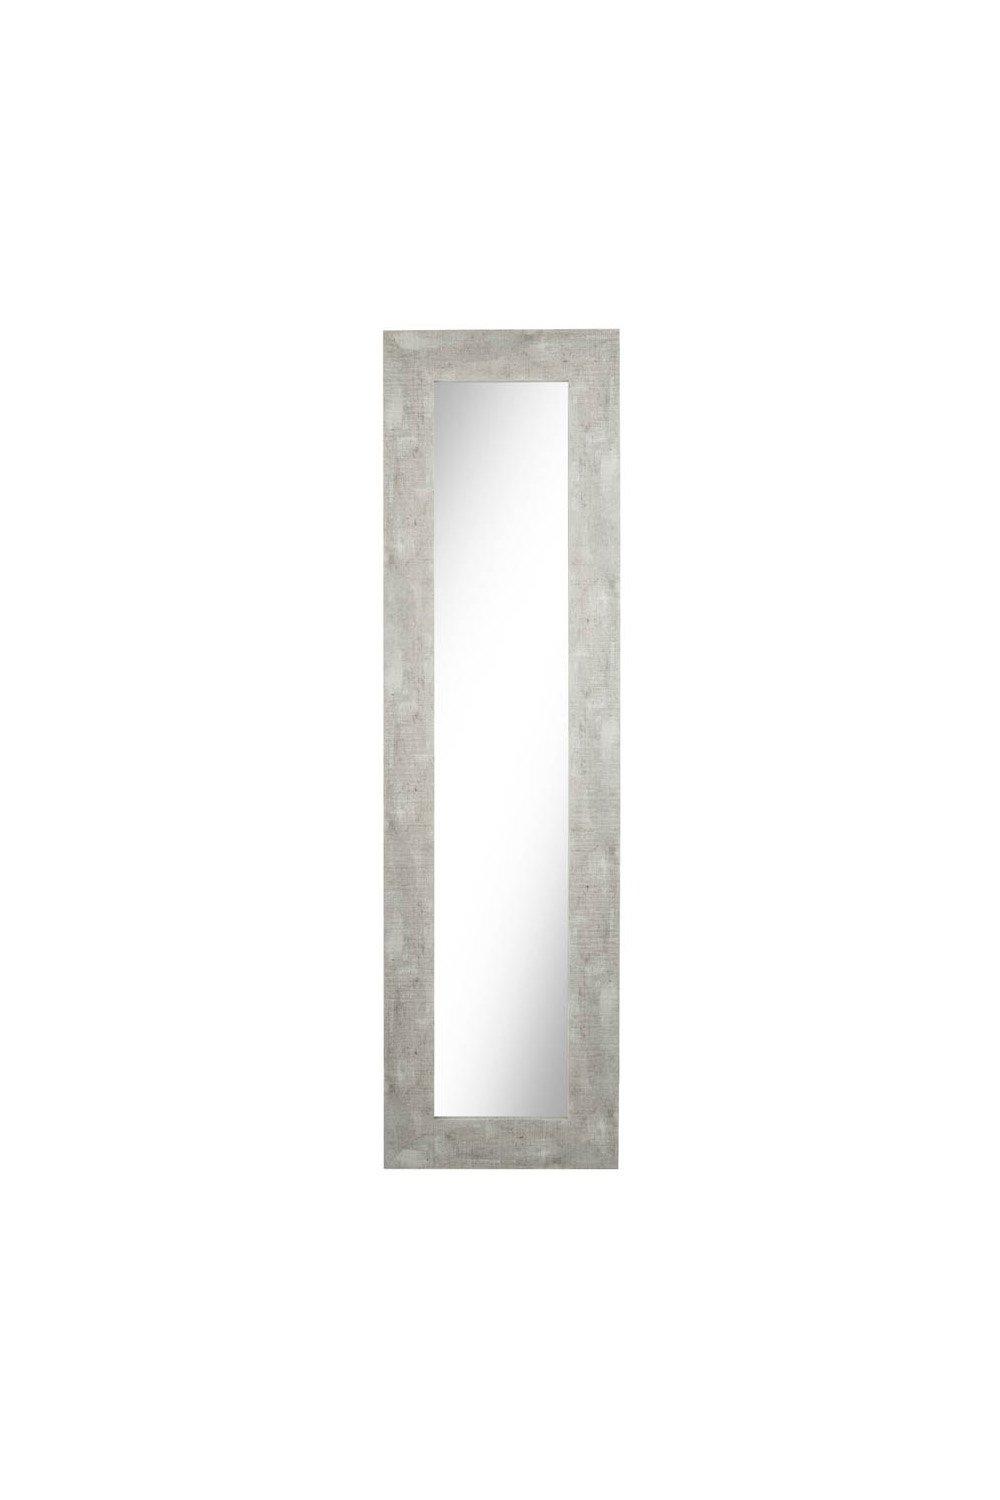 Mansfield Distressed White/Soft Grey Mirror 165x46cm